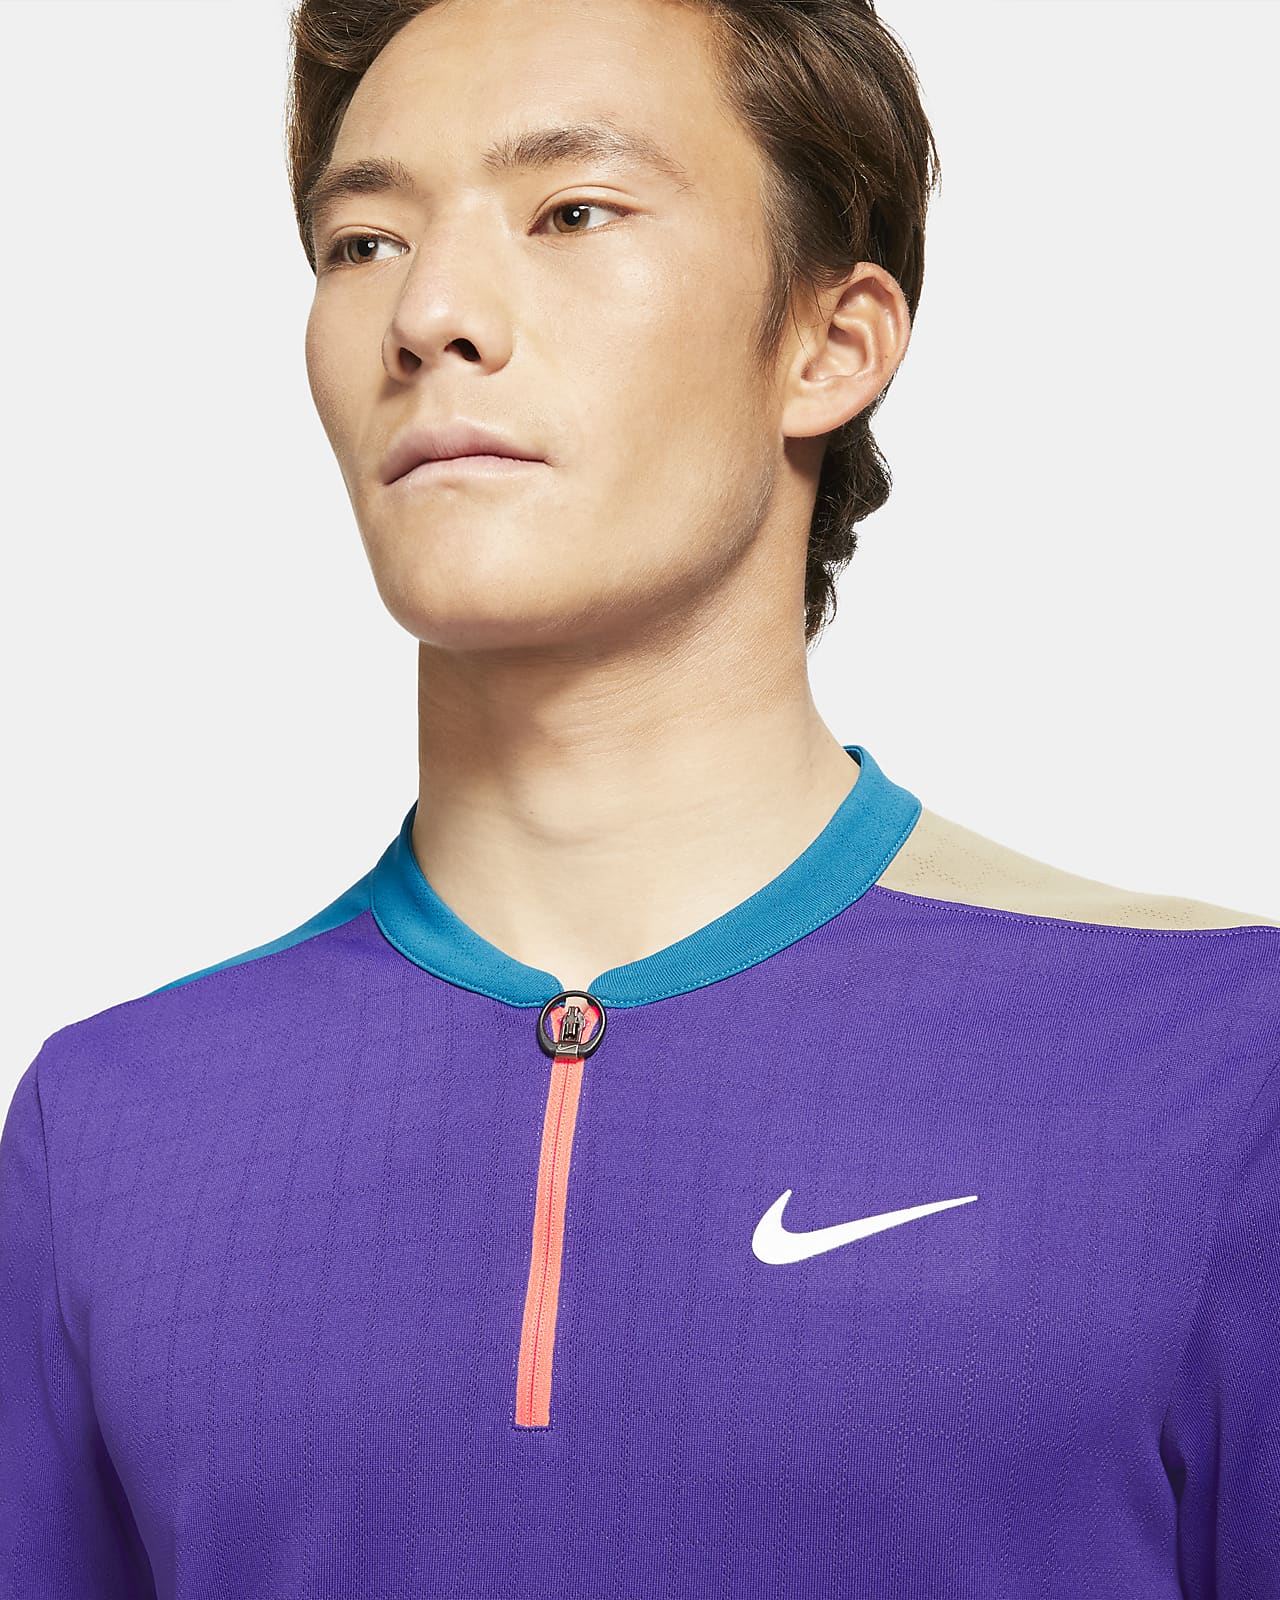 nike tennis purple